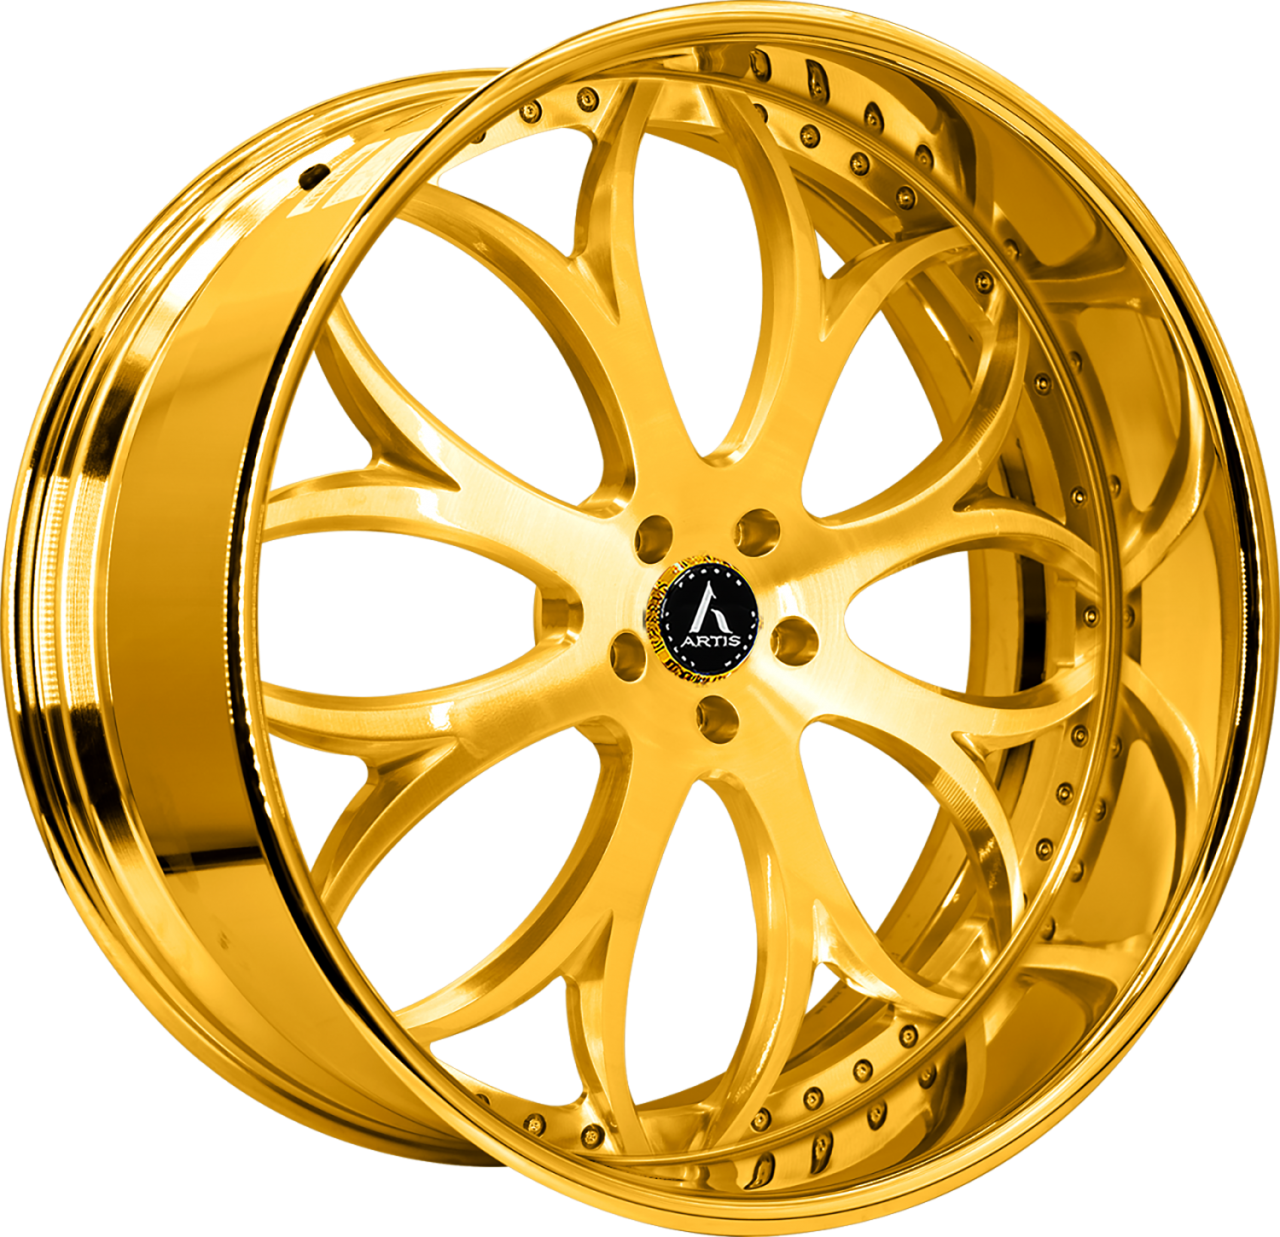 Artis Forged Radon-M wheel with Gold finish